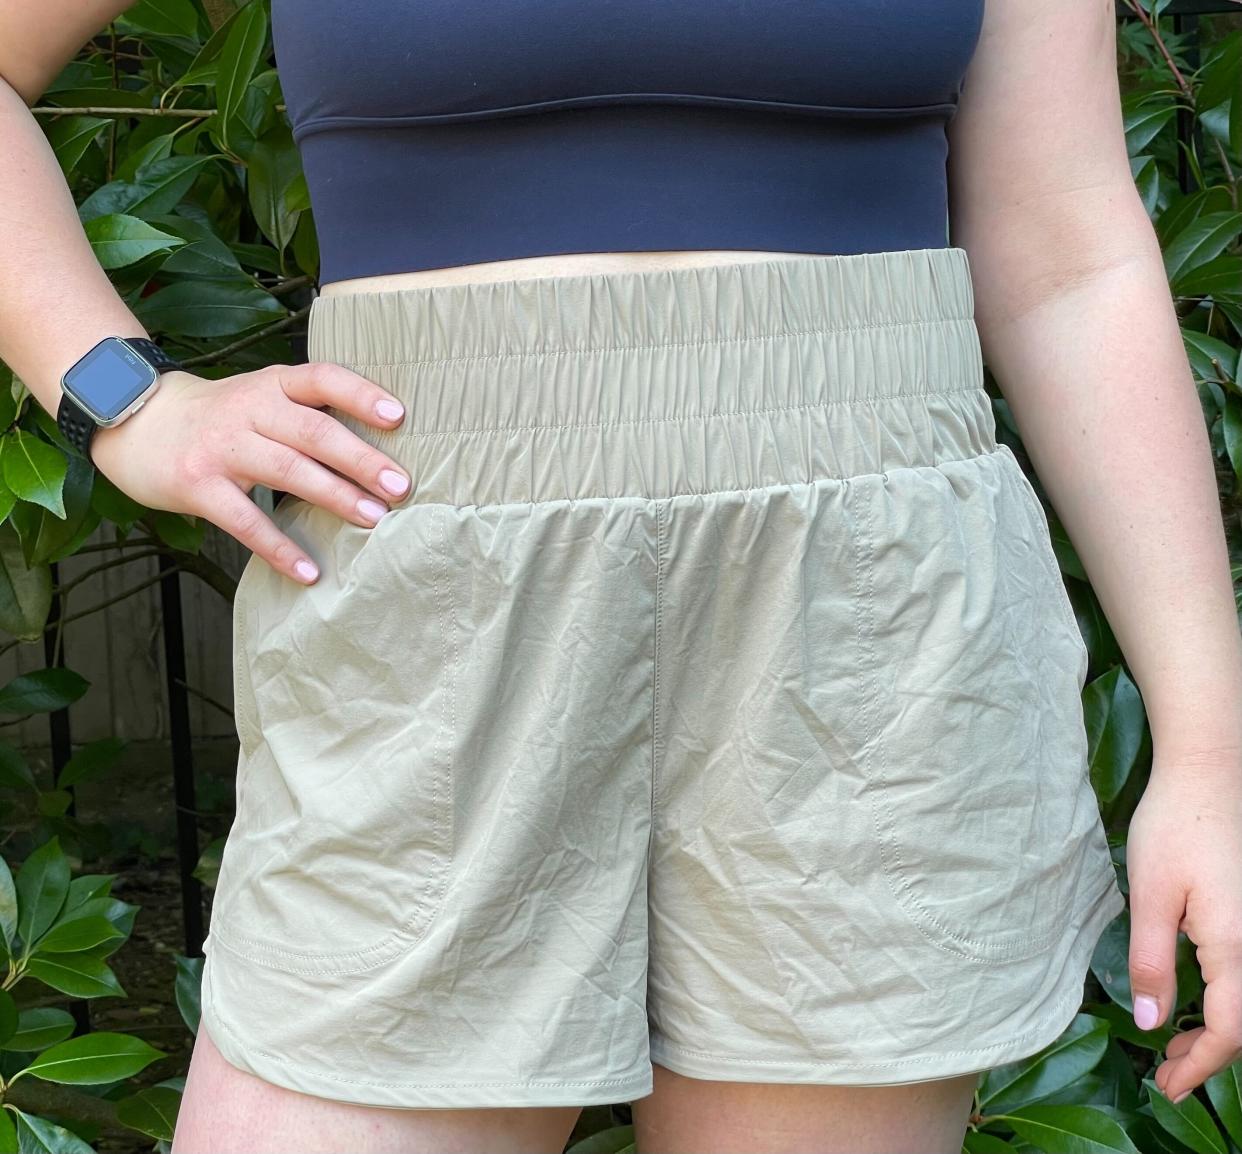 Editorial intern Zoe Malin no longer worries about her shorts chafing since buying these JoyLab Women’s High-Rise Woven Shorts. (Zoe Malin)